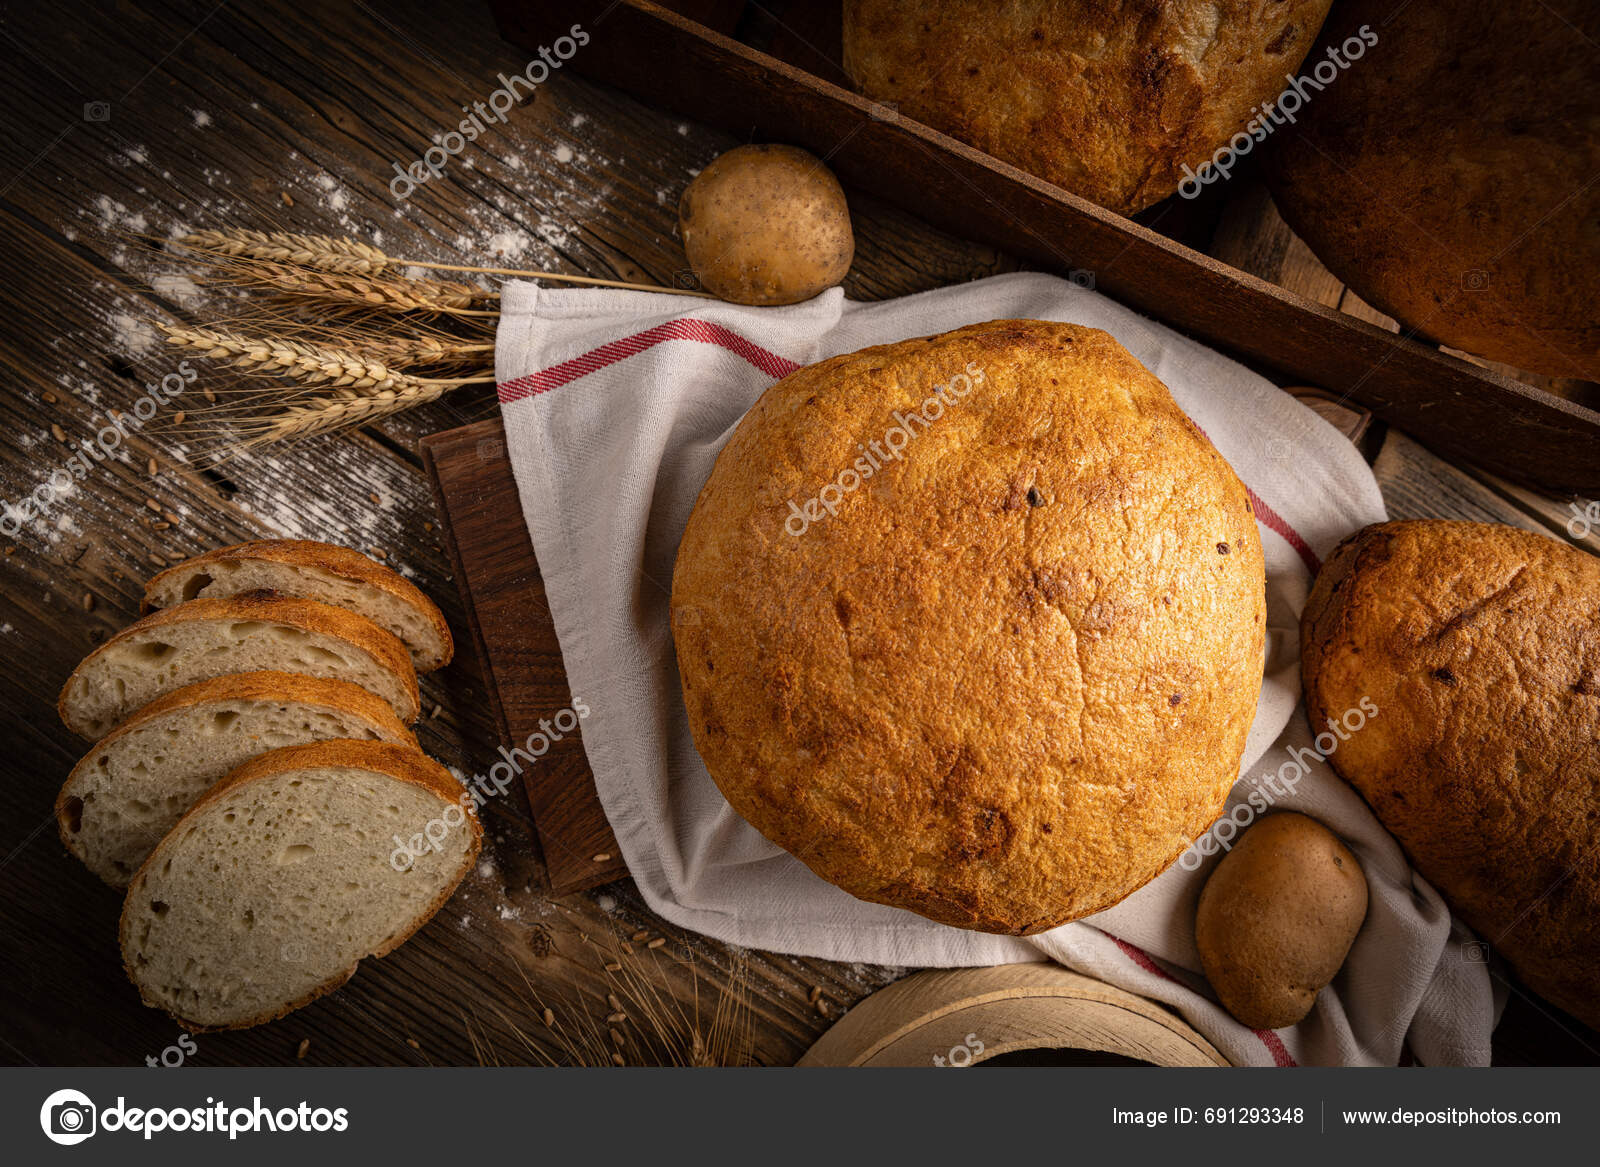 https://st5.depositphotos.com/1011514/69129/i/1600/depositphotos_691293348-stock-photo-artisan-whole-sliced-sourdough-bread.jpg